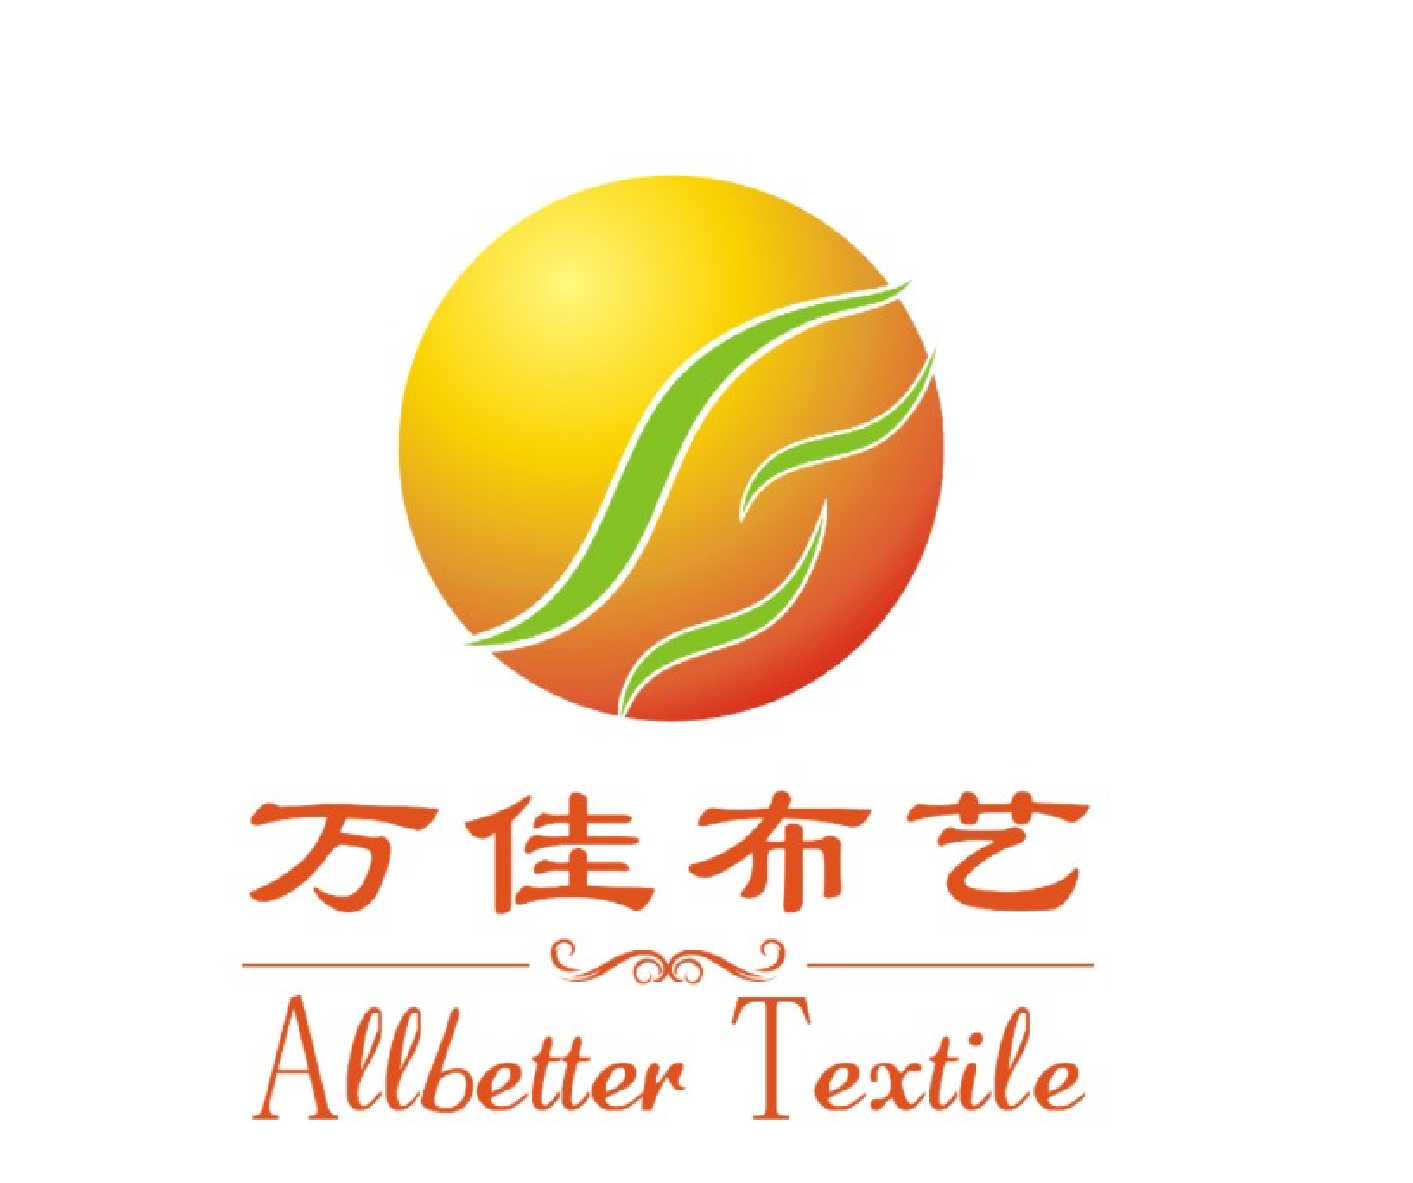 shaoxing allbetter textile co., ltd